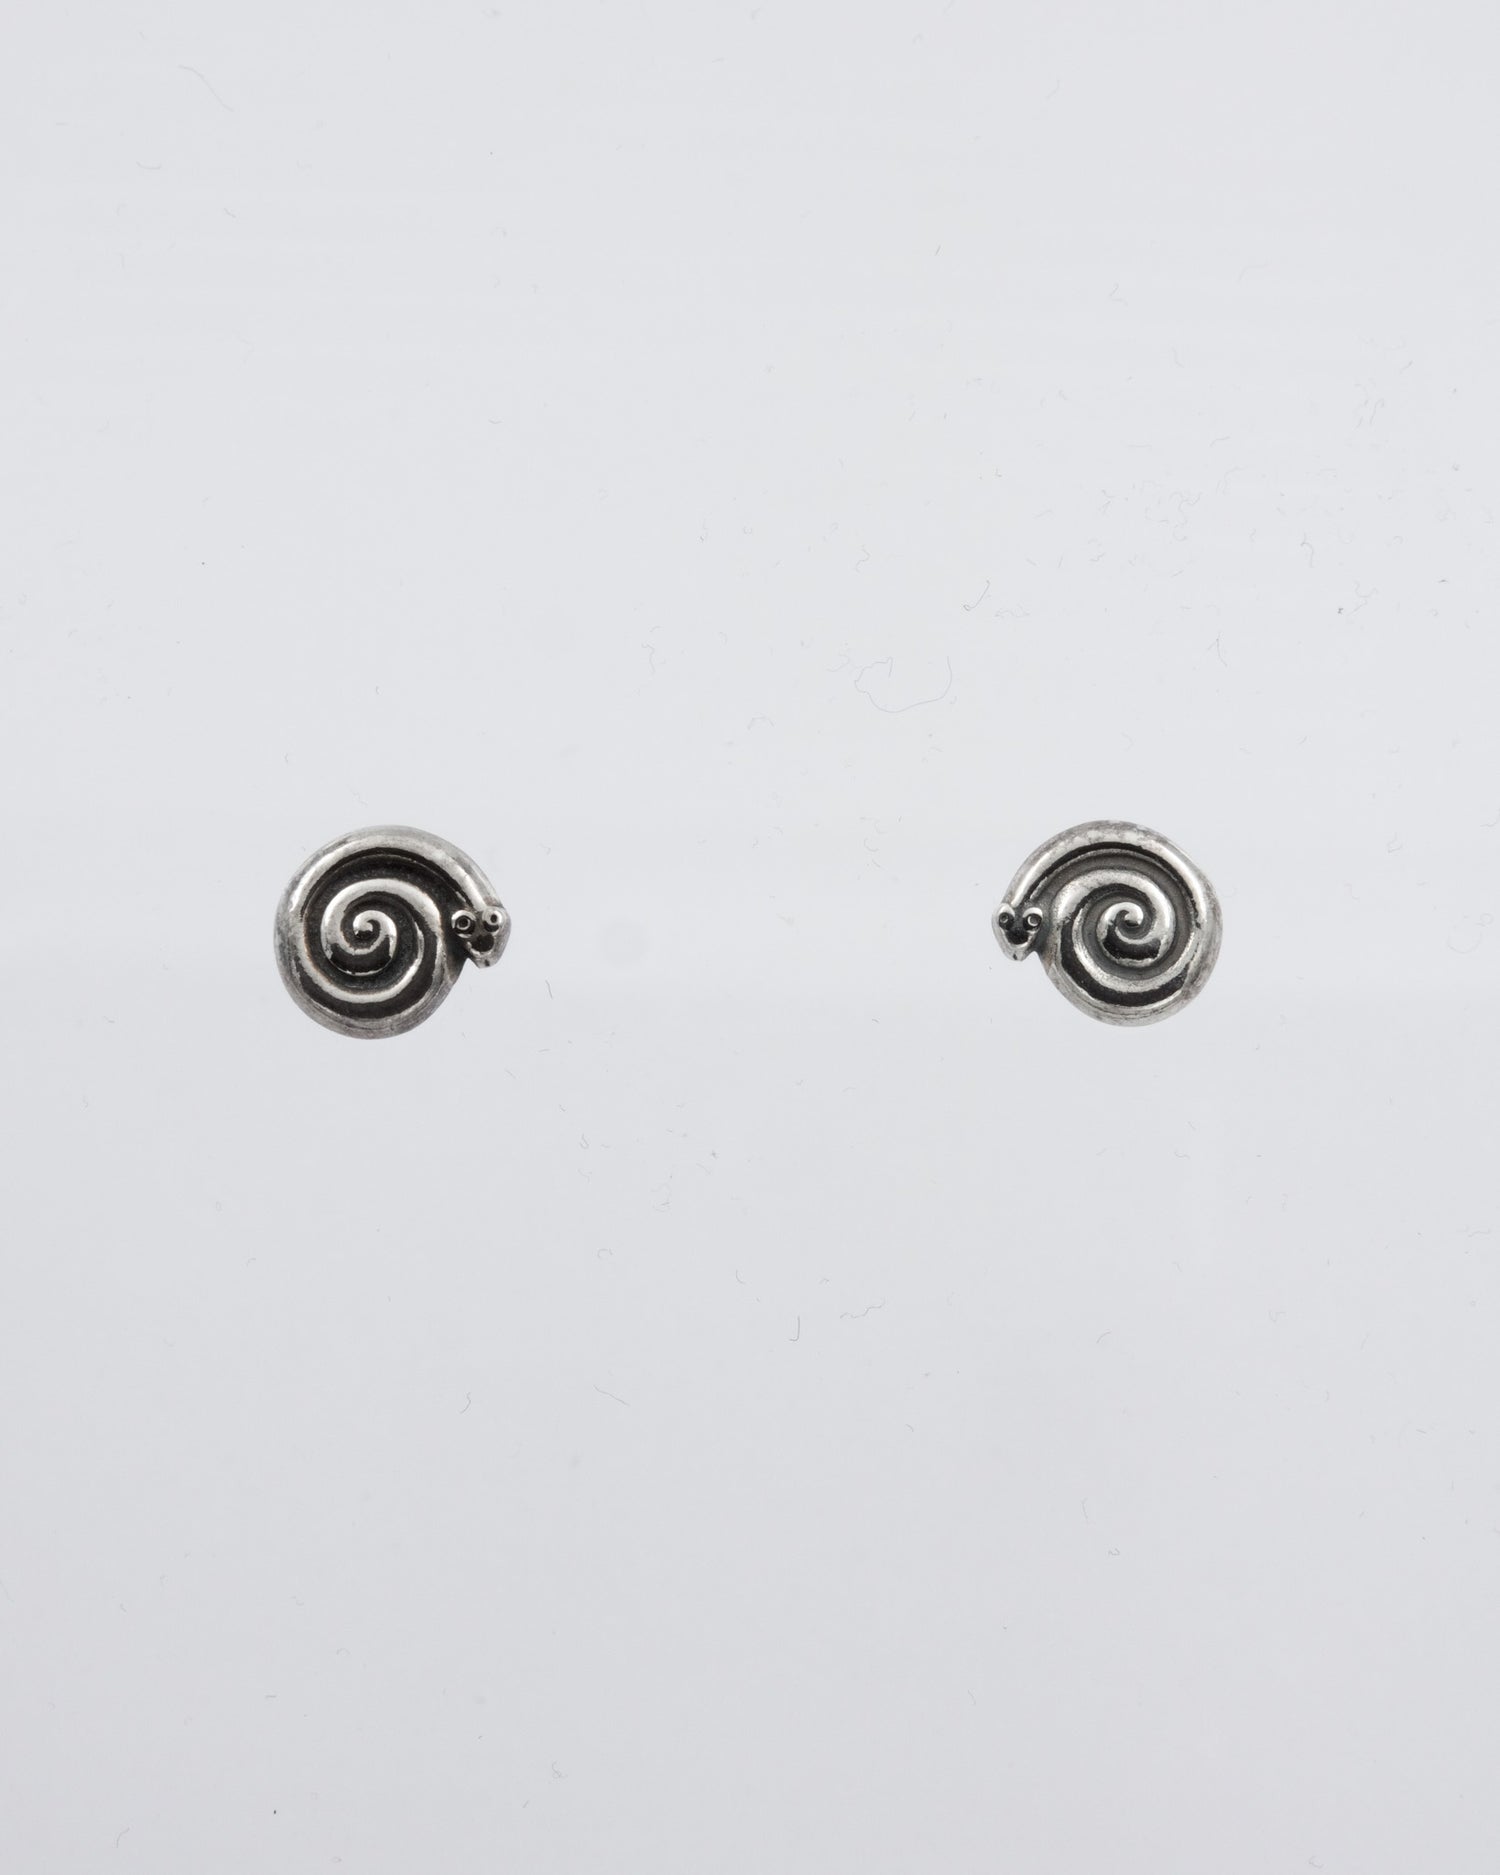 Held Copper snake earrings, small pin silver